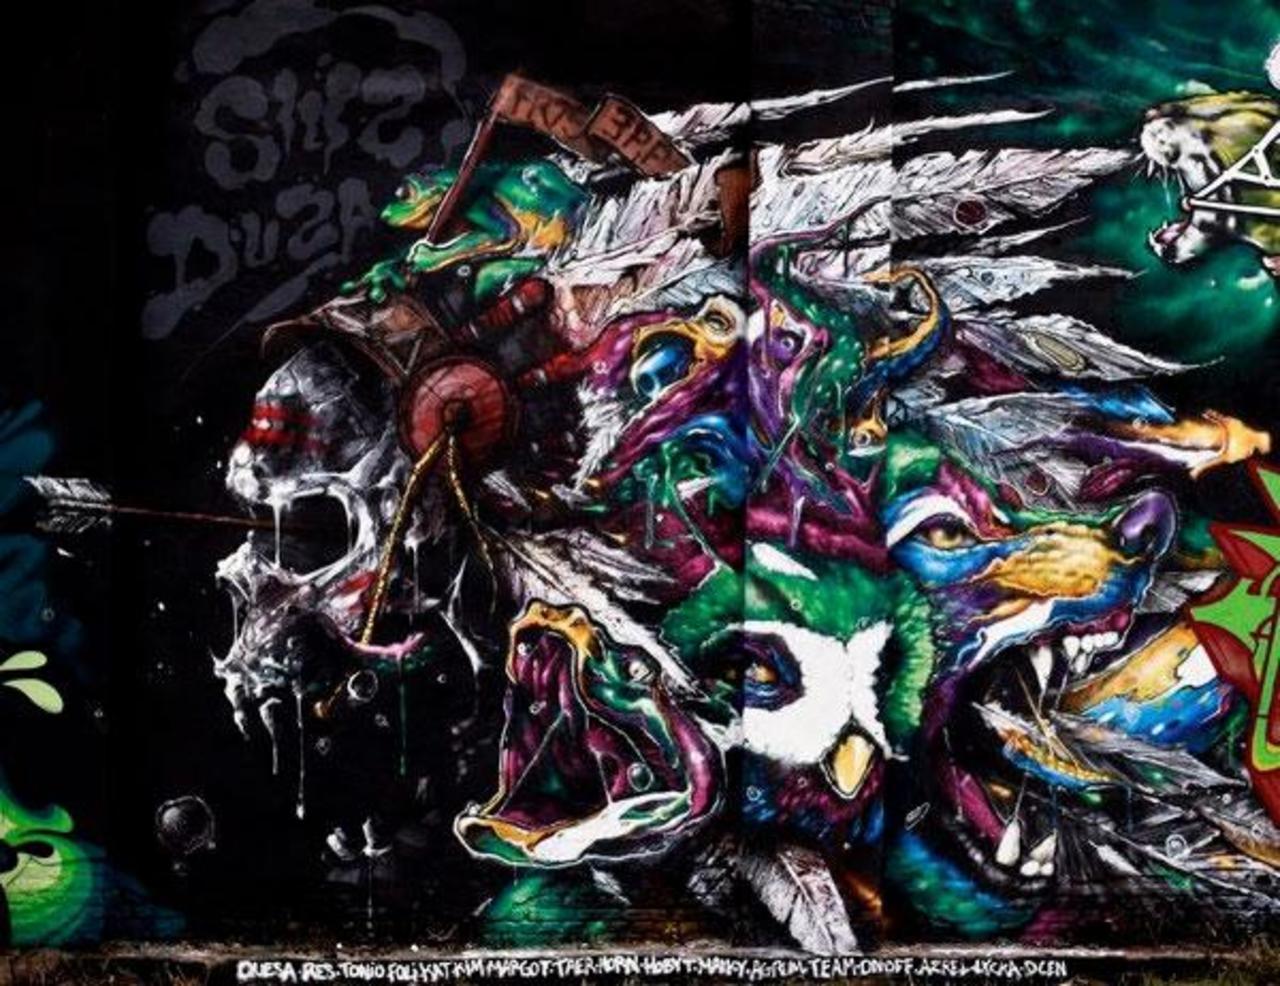 #Streetart #urbanart #graffiti #painting #mural des artistes Sly2 et Duza #Paris France http://t.co/3sz9SDMb5r https://goo.gl/7kifqw